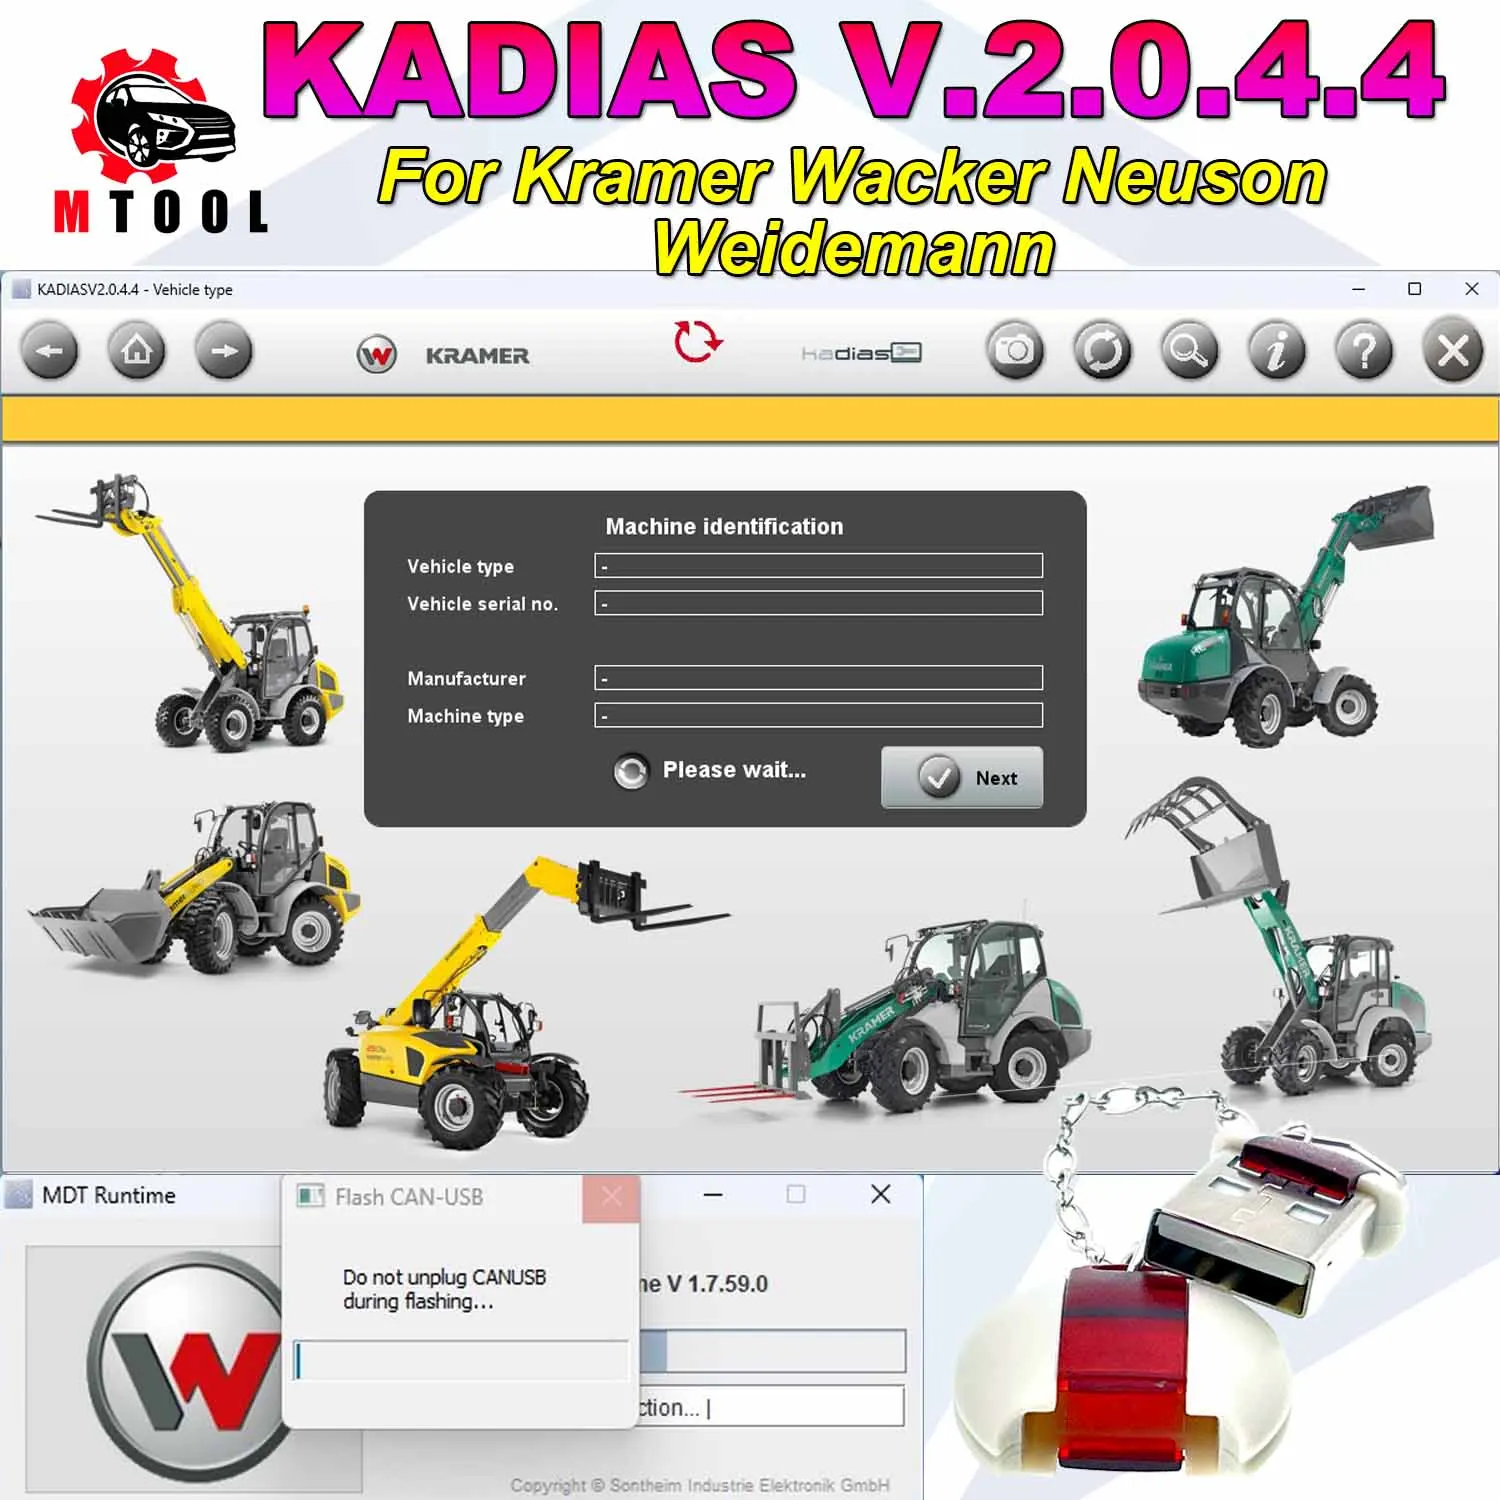 

New KADIAS v.2.0.4.4 Upgrade 5 Level UNLIMITED for Kramer Wacker Neuson Weidemann Supports CANFox EC2112 IFM USB/ CAN-RS232 Tool